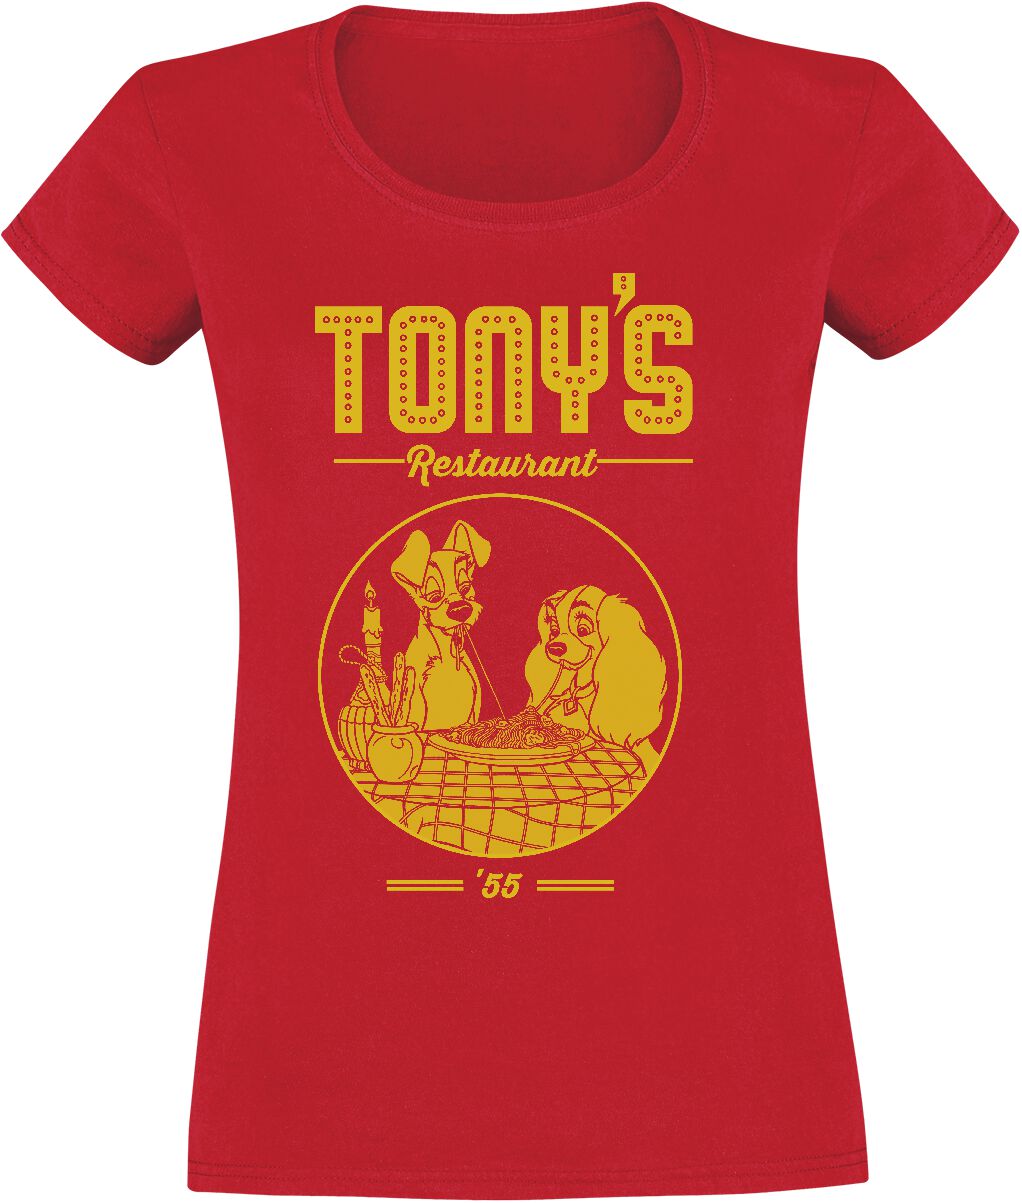 Susi & Strolch Tonys Restaurant T-Shirt rot product